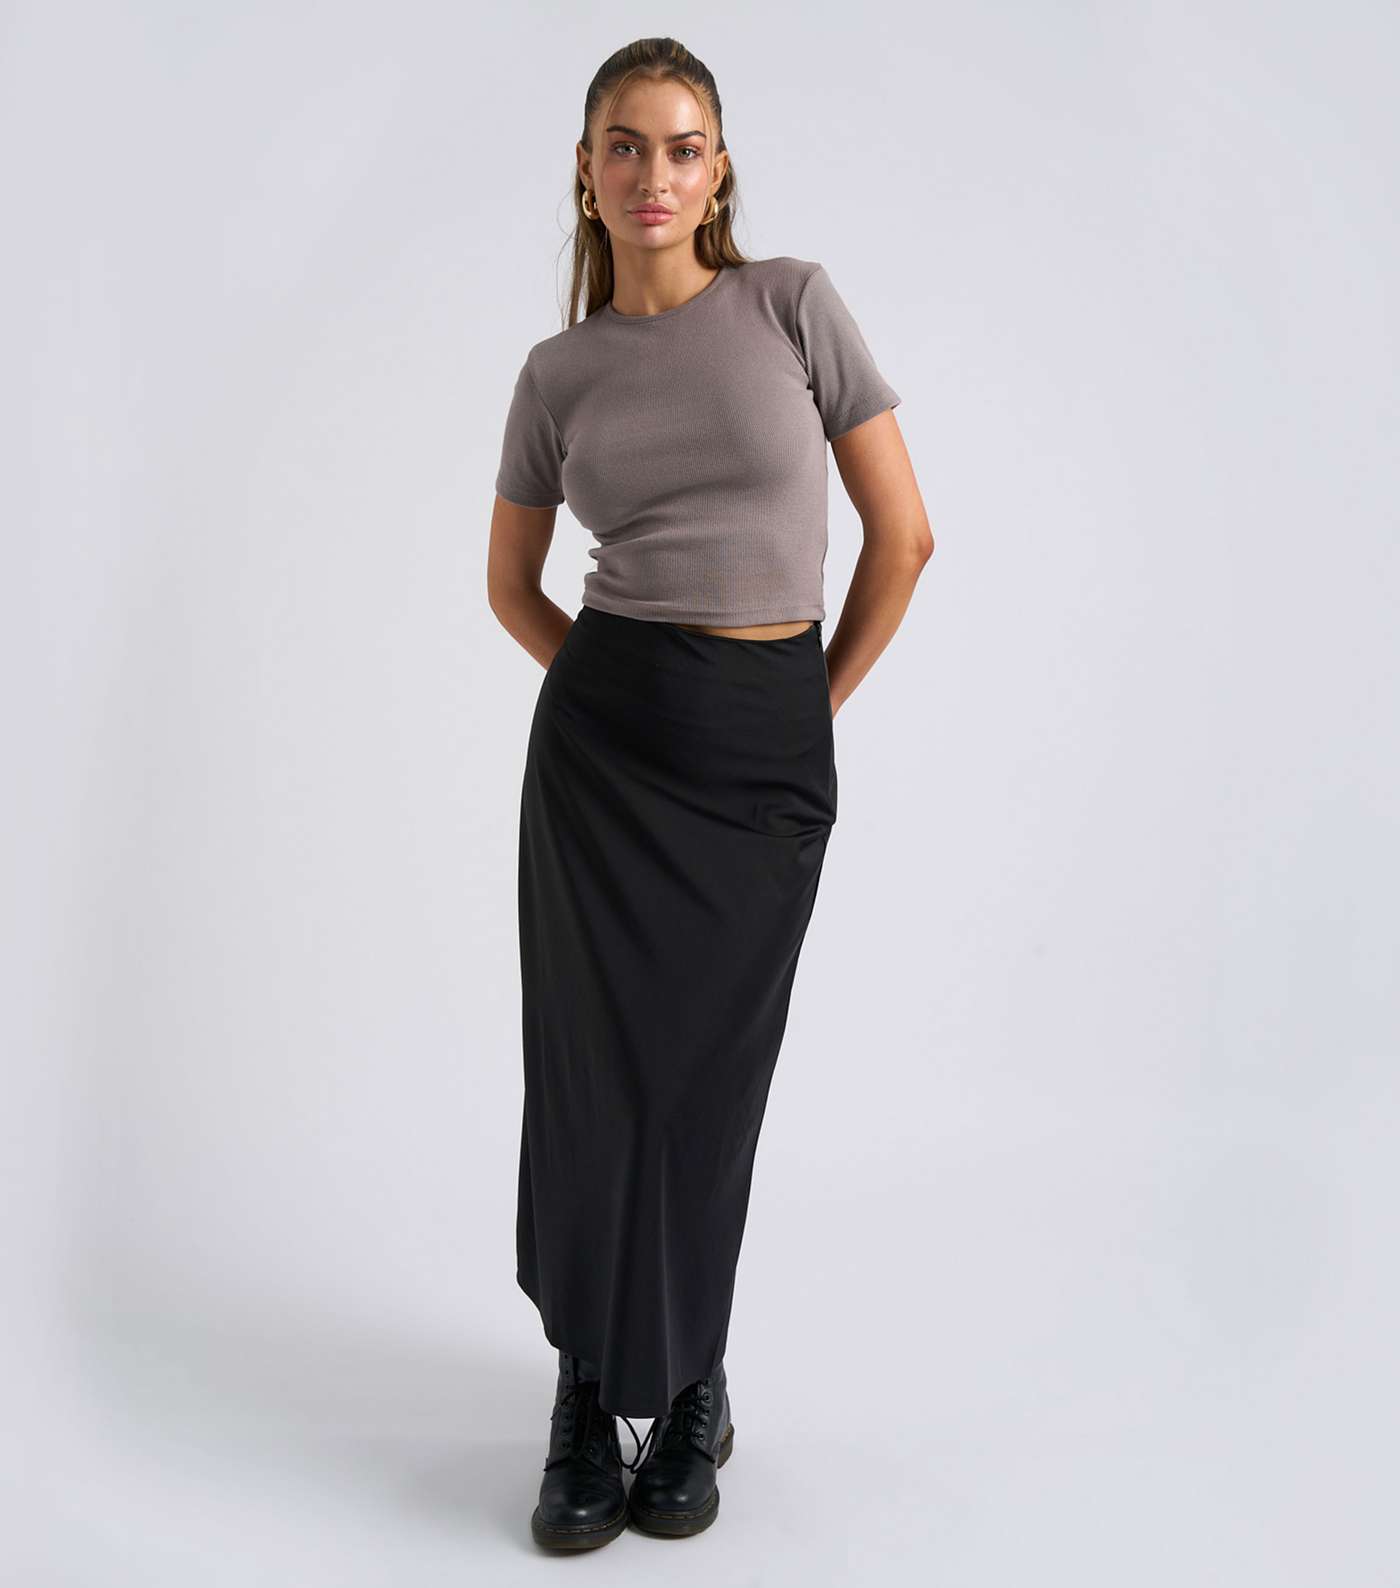 Urban Bliss Black Satin Maxi Skirt